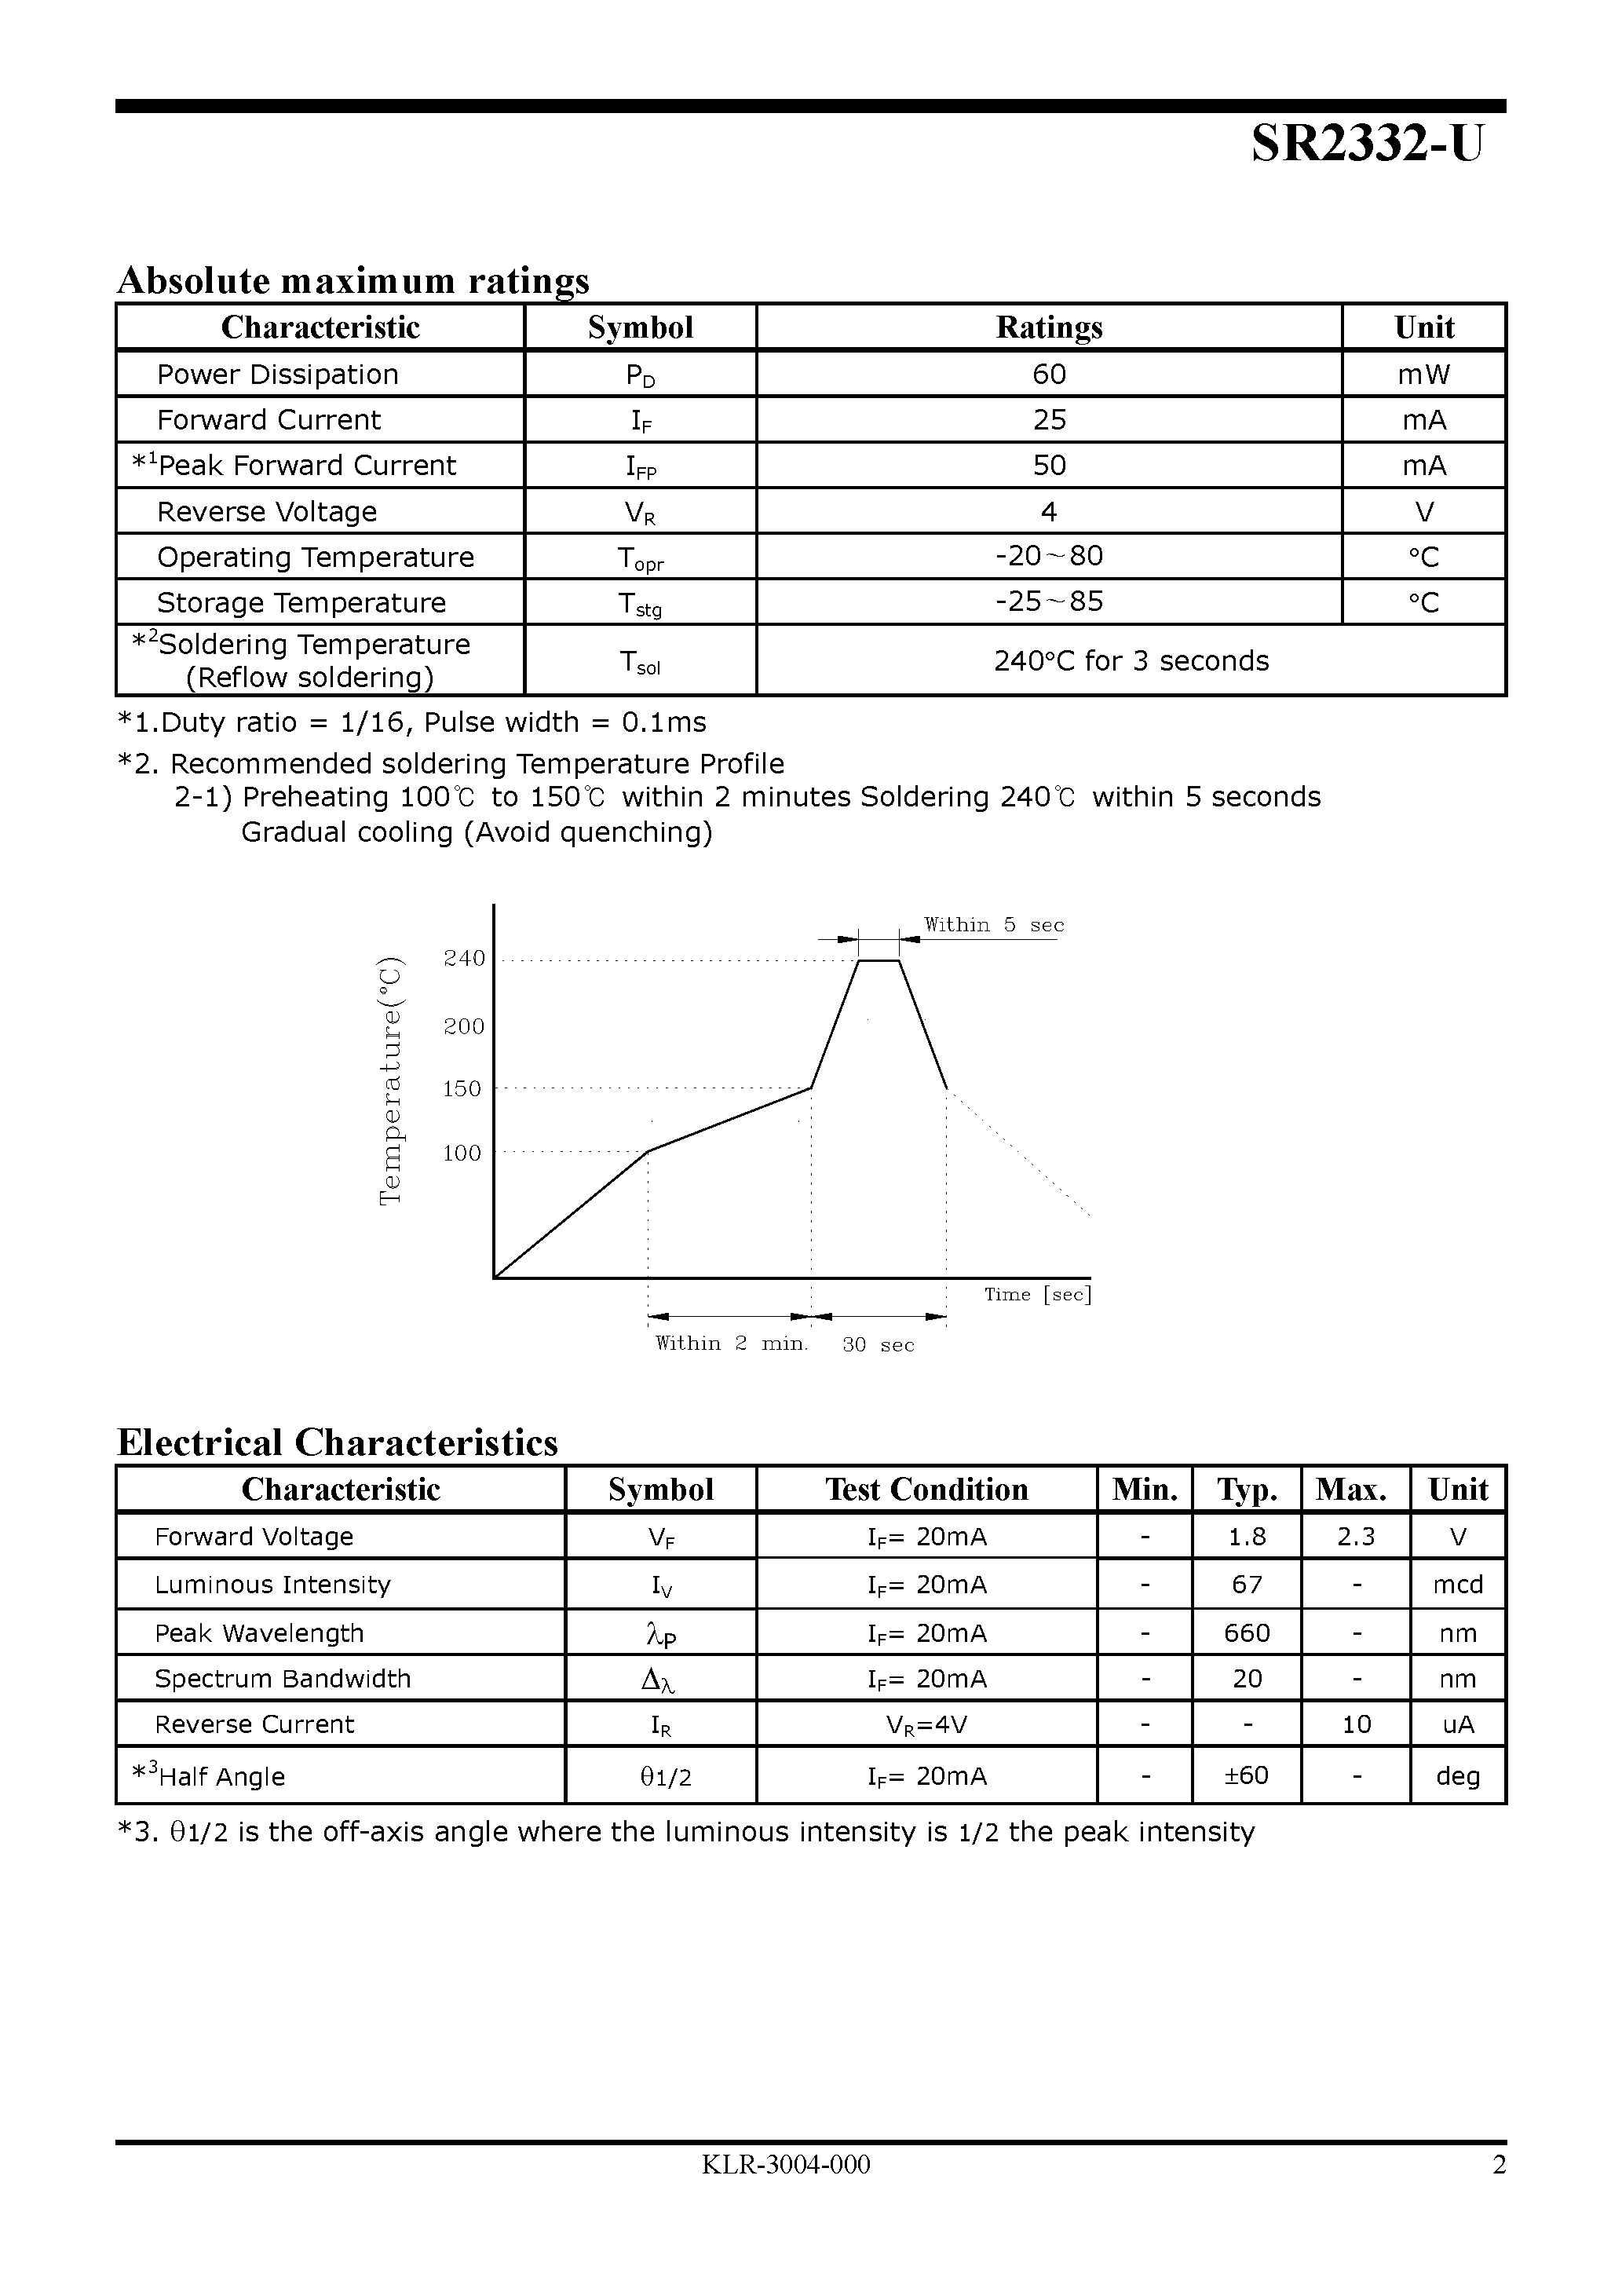 Datasheet SR2332-U - High Brightness Chip LED Lamp page 2